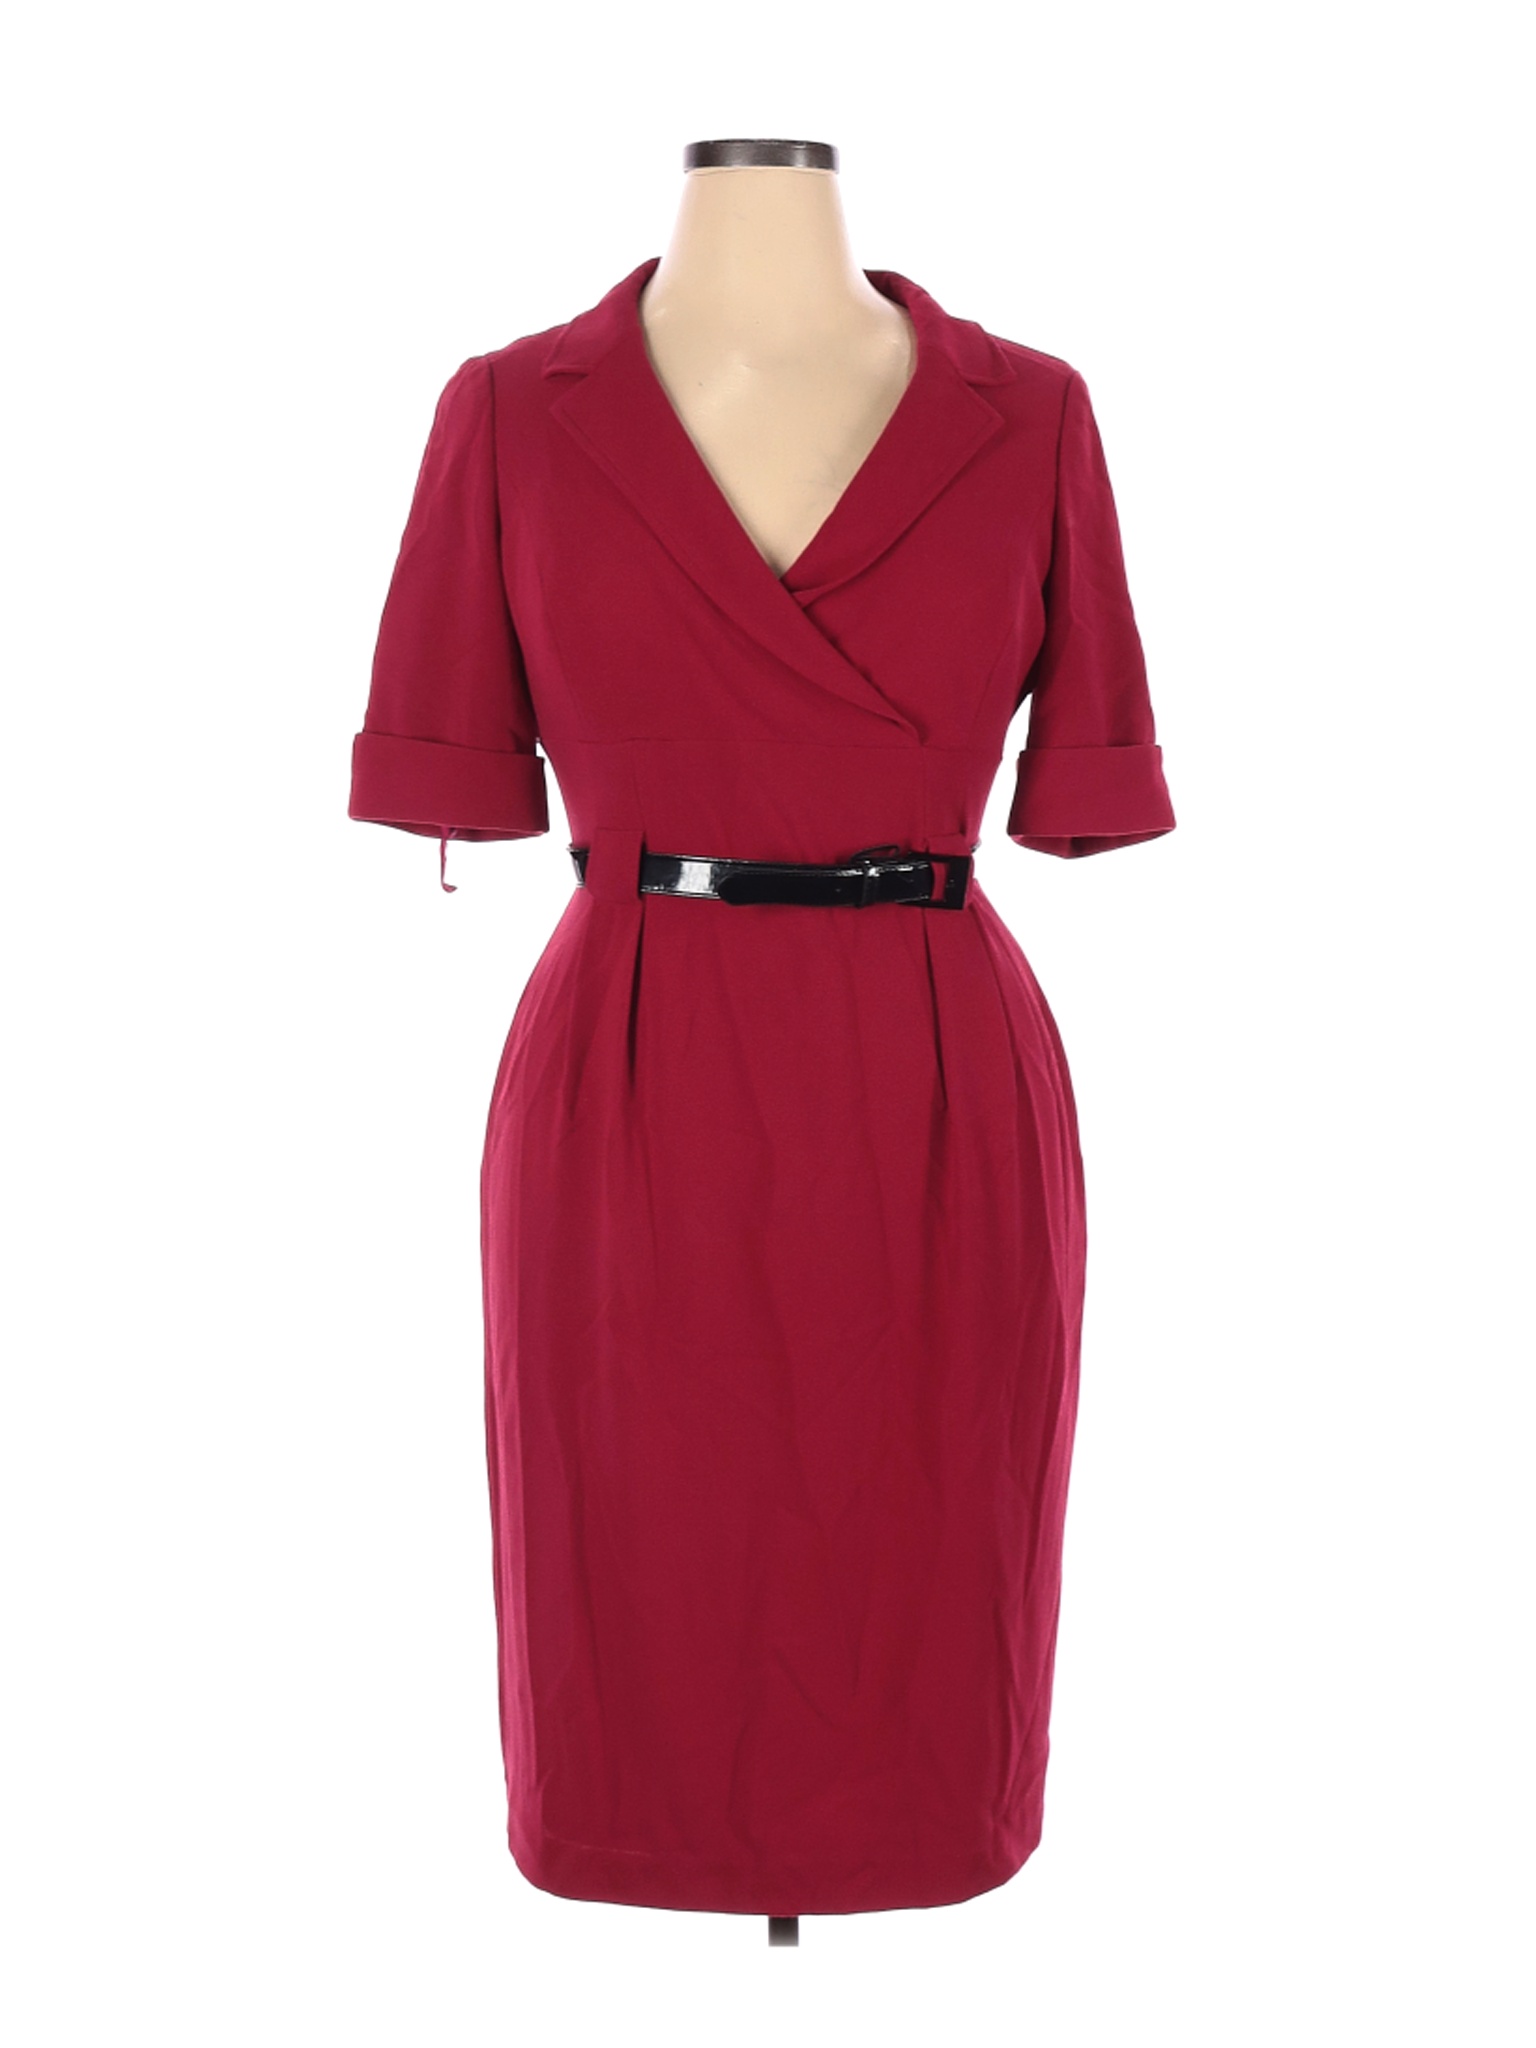 Jones New York Women Red Casual Dress 14 | eBay